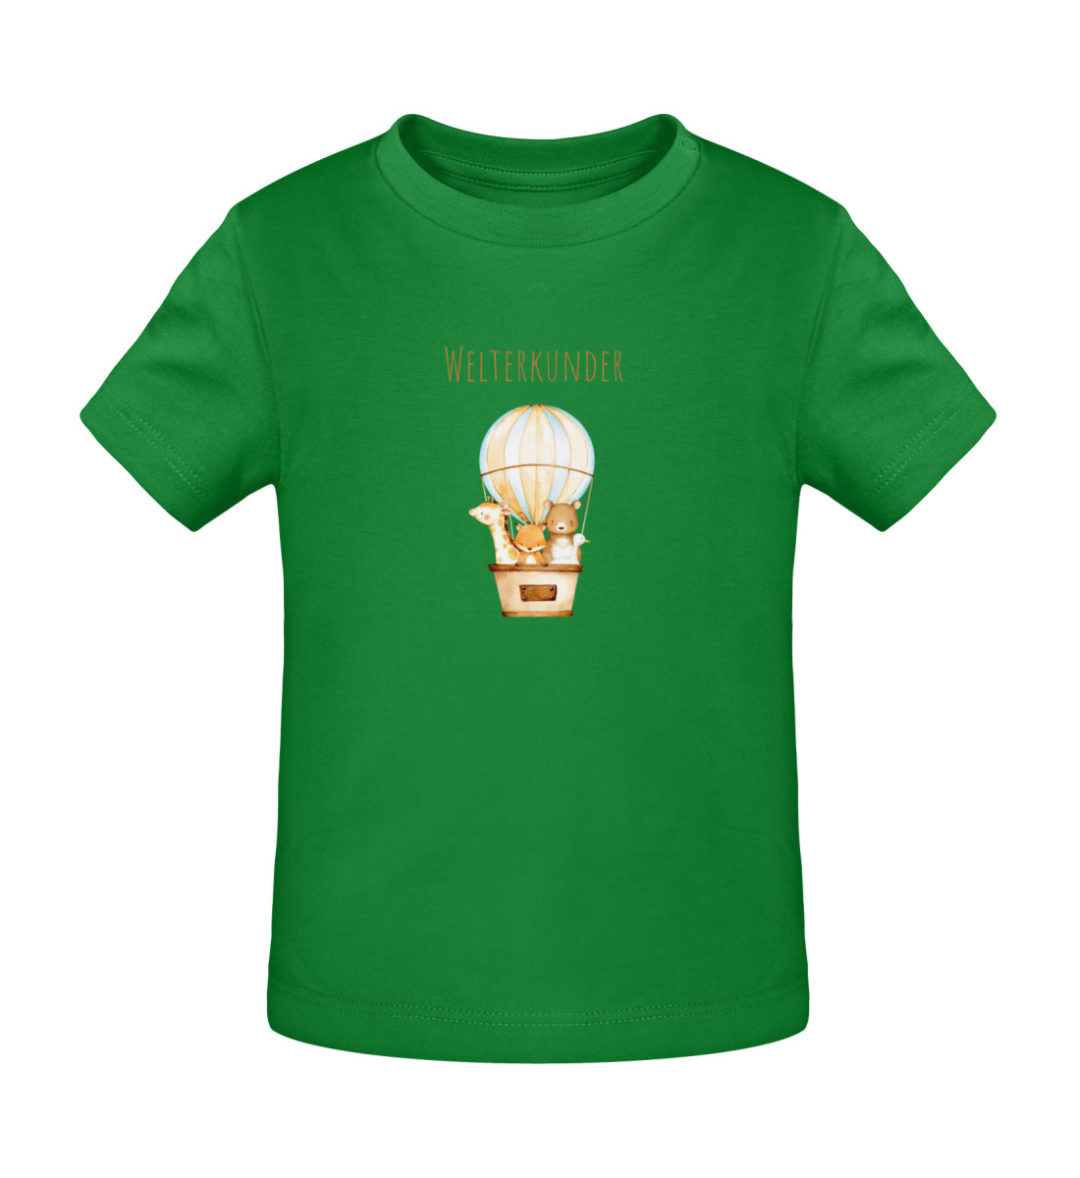 Welterkunder - Baby Creator T-Shirt ST/ST-6879